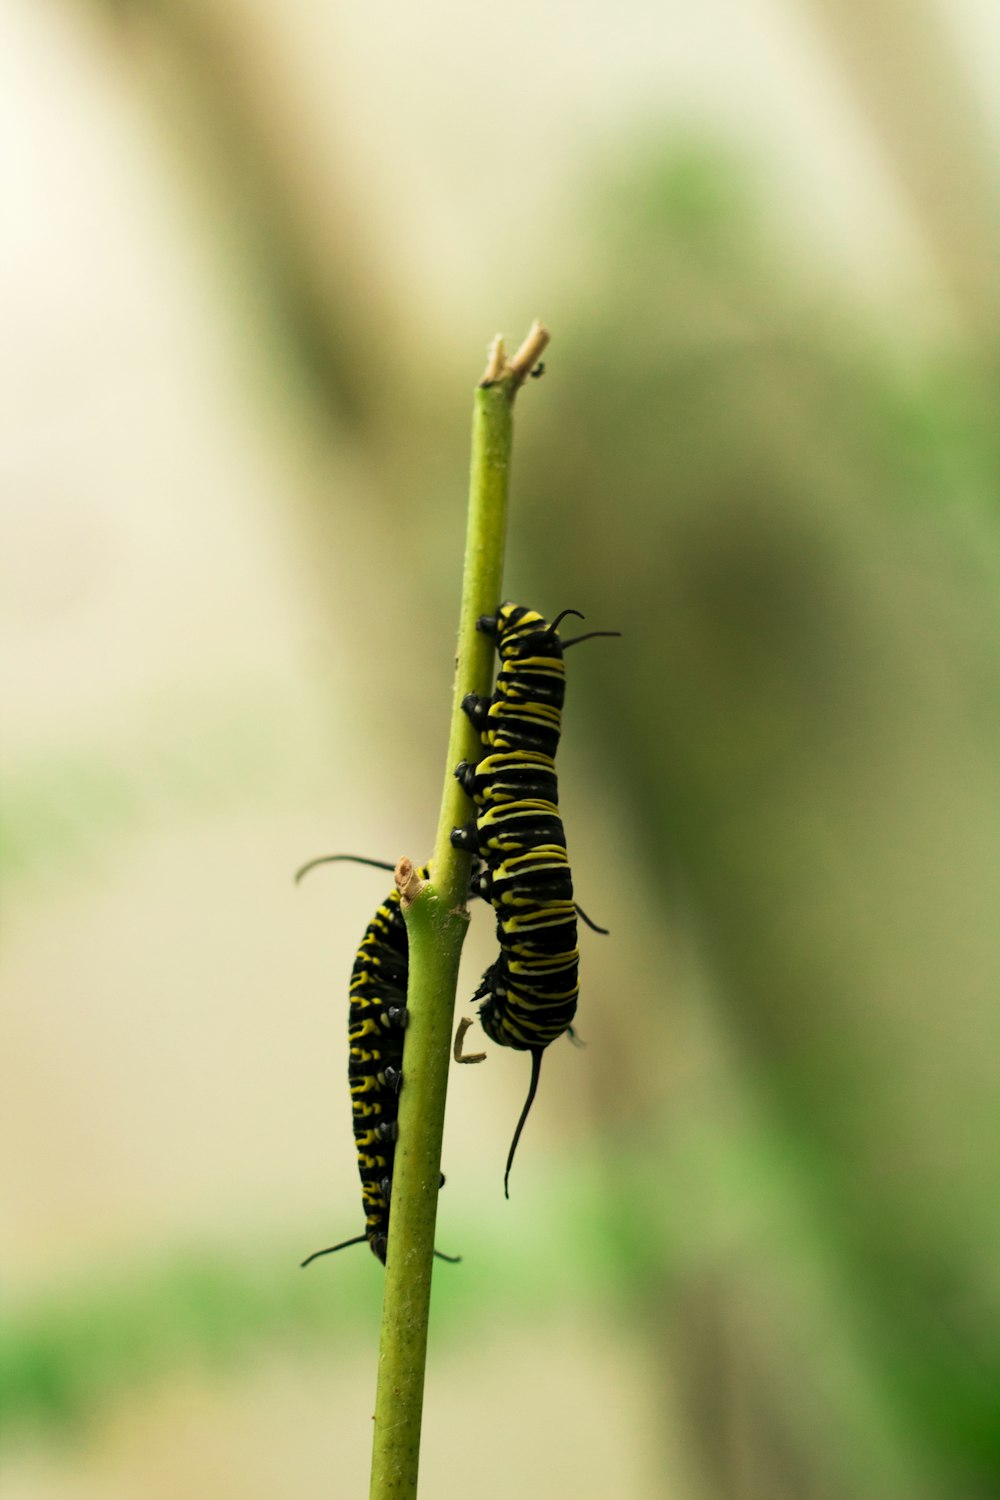 two black caterpillars